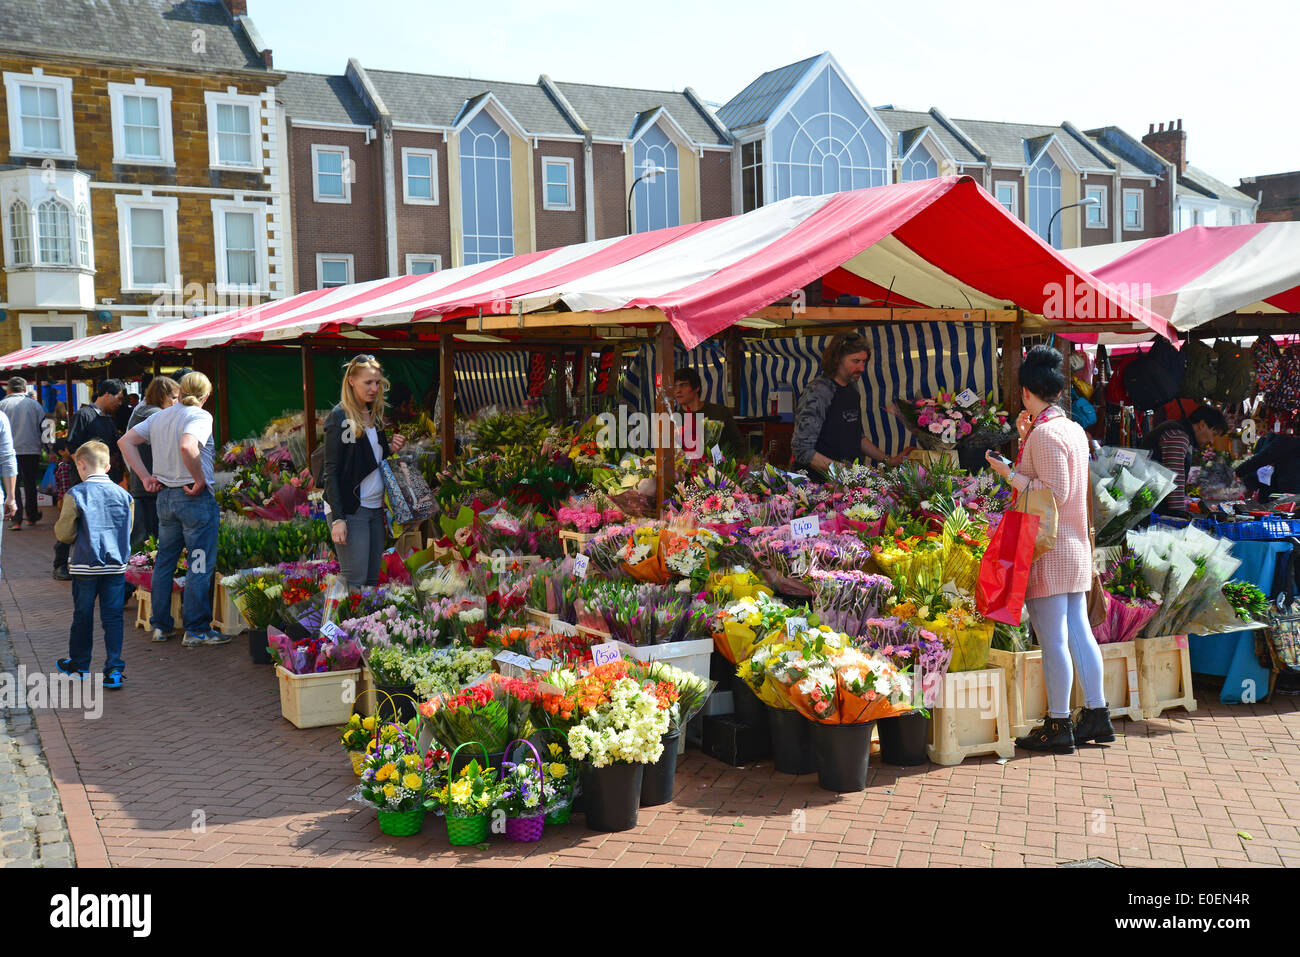 Fruit and vegetable stall at Saturday Market, Market Square, Northampton, Northamptonshire, England, United Kingdom Stock Photo